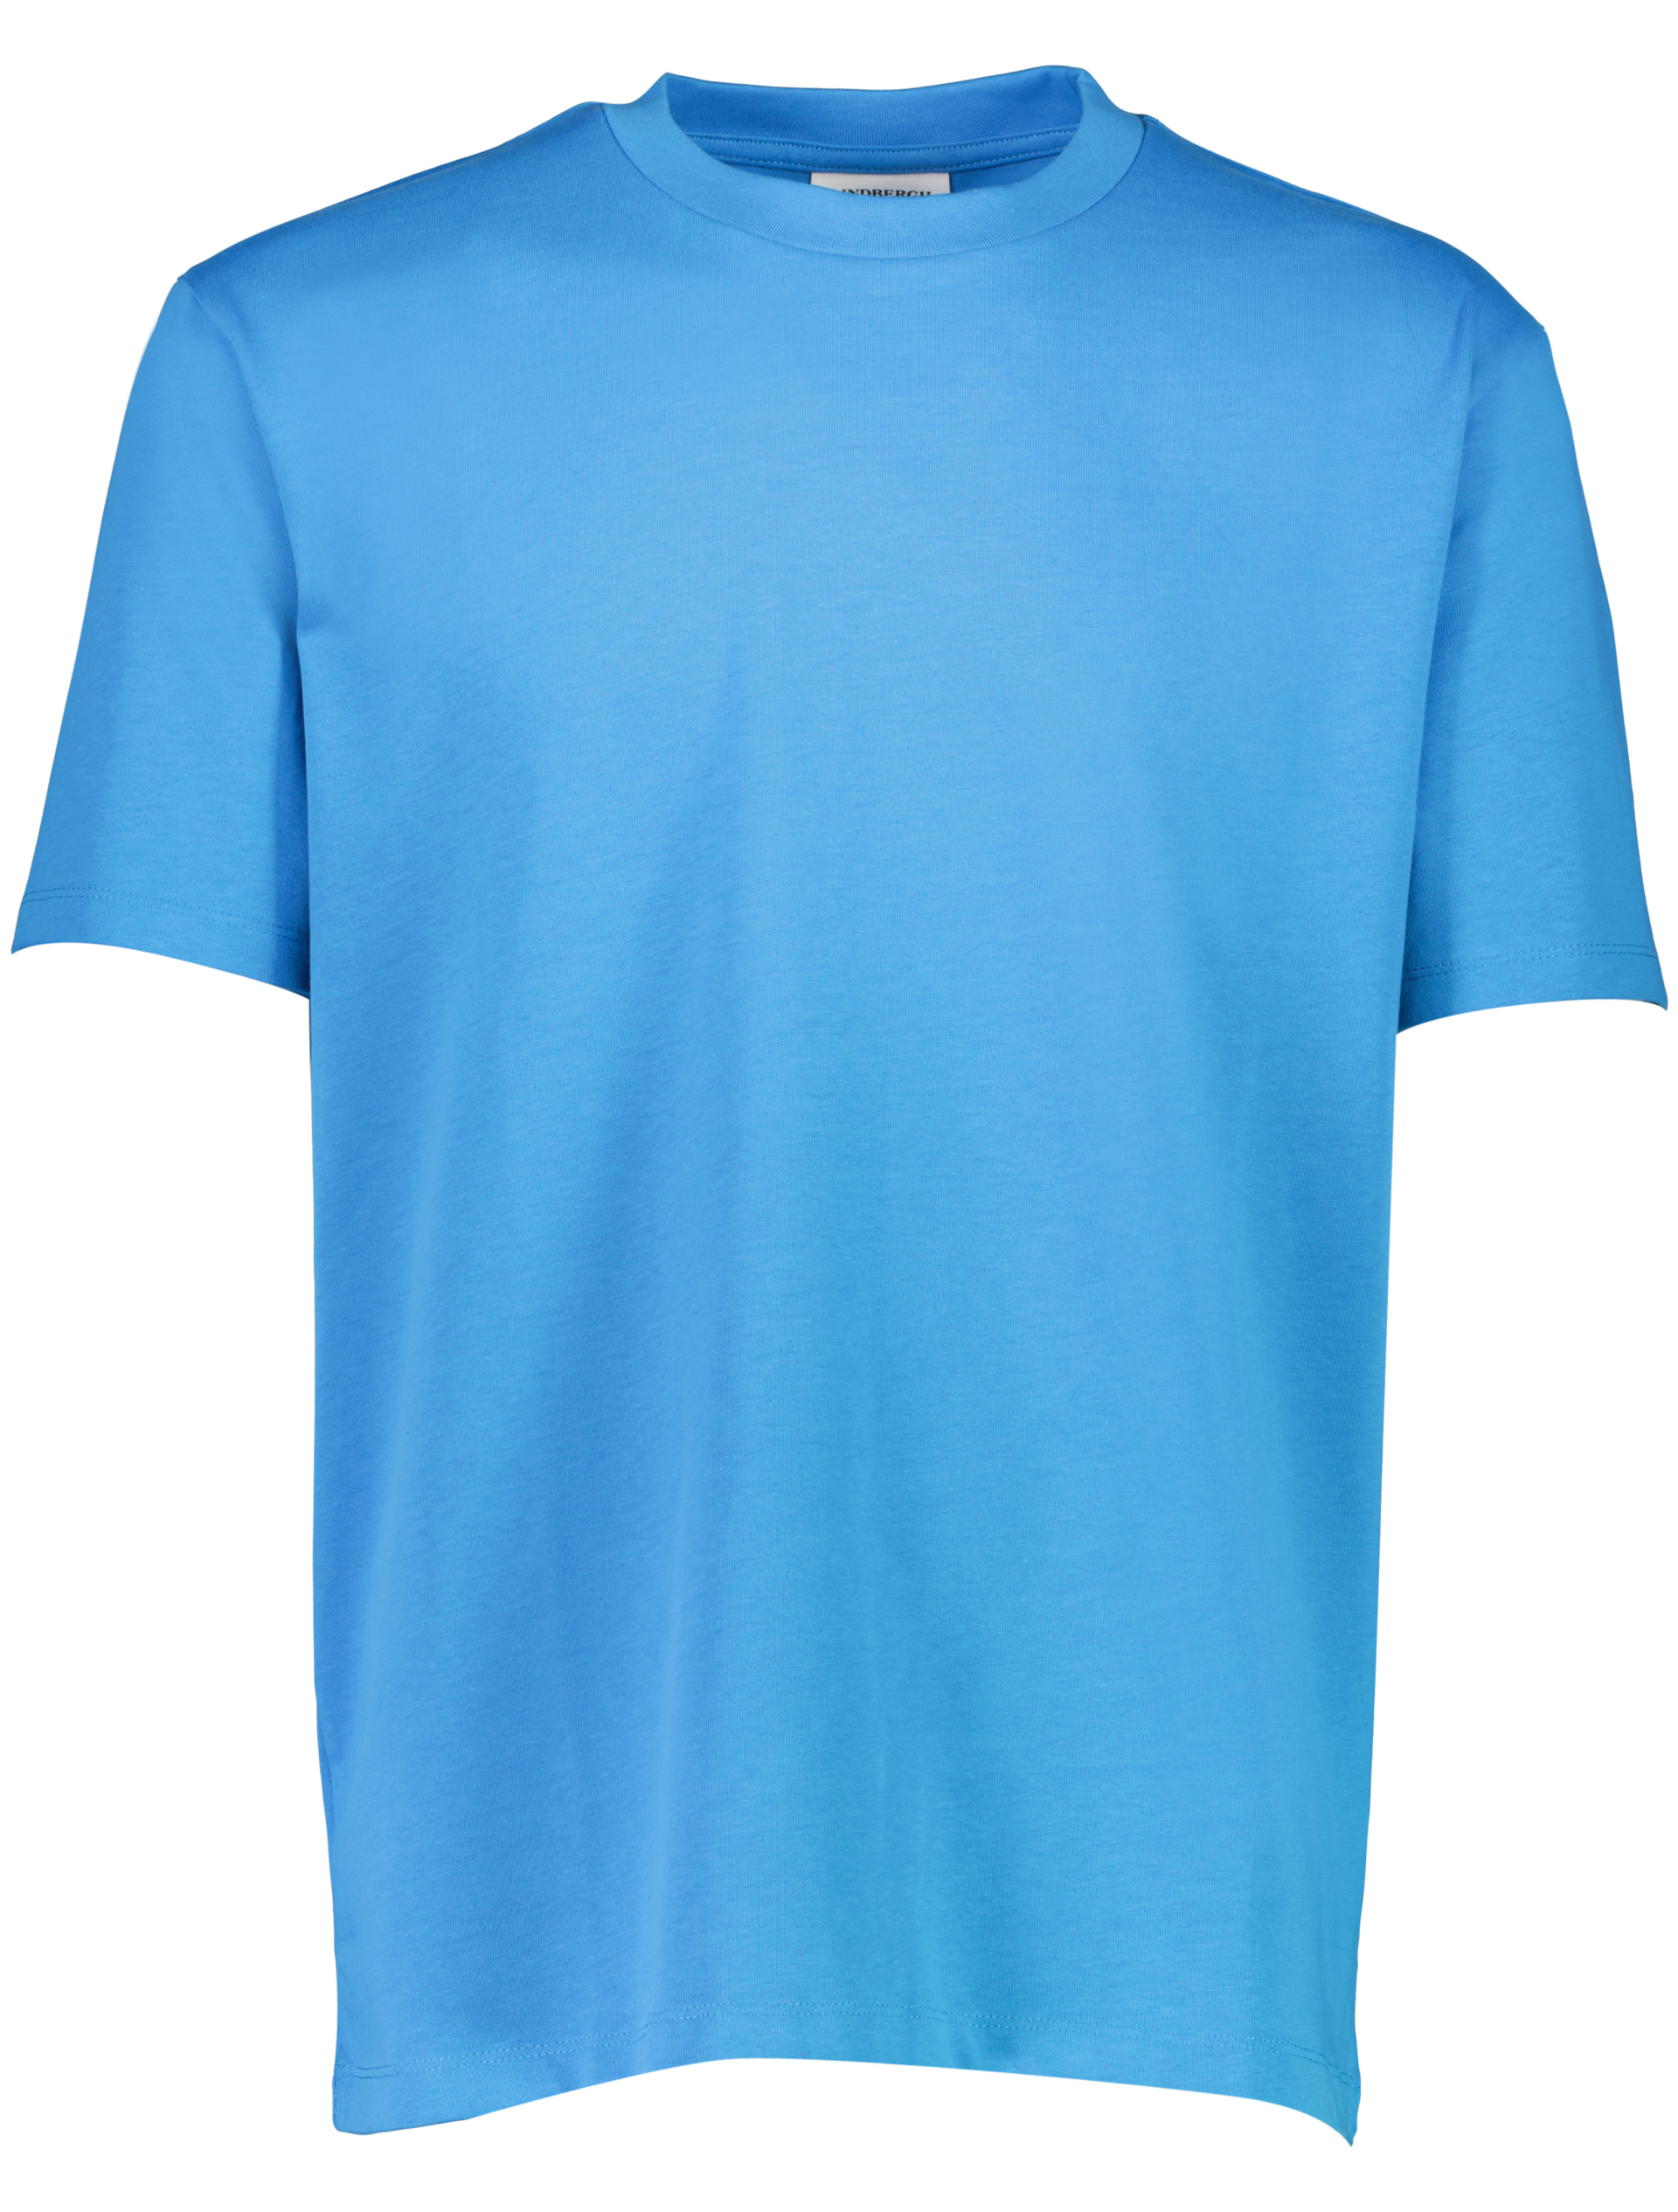 Lindbergh T-shirt blå / bright blue